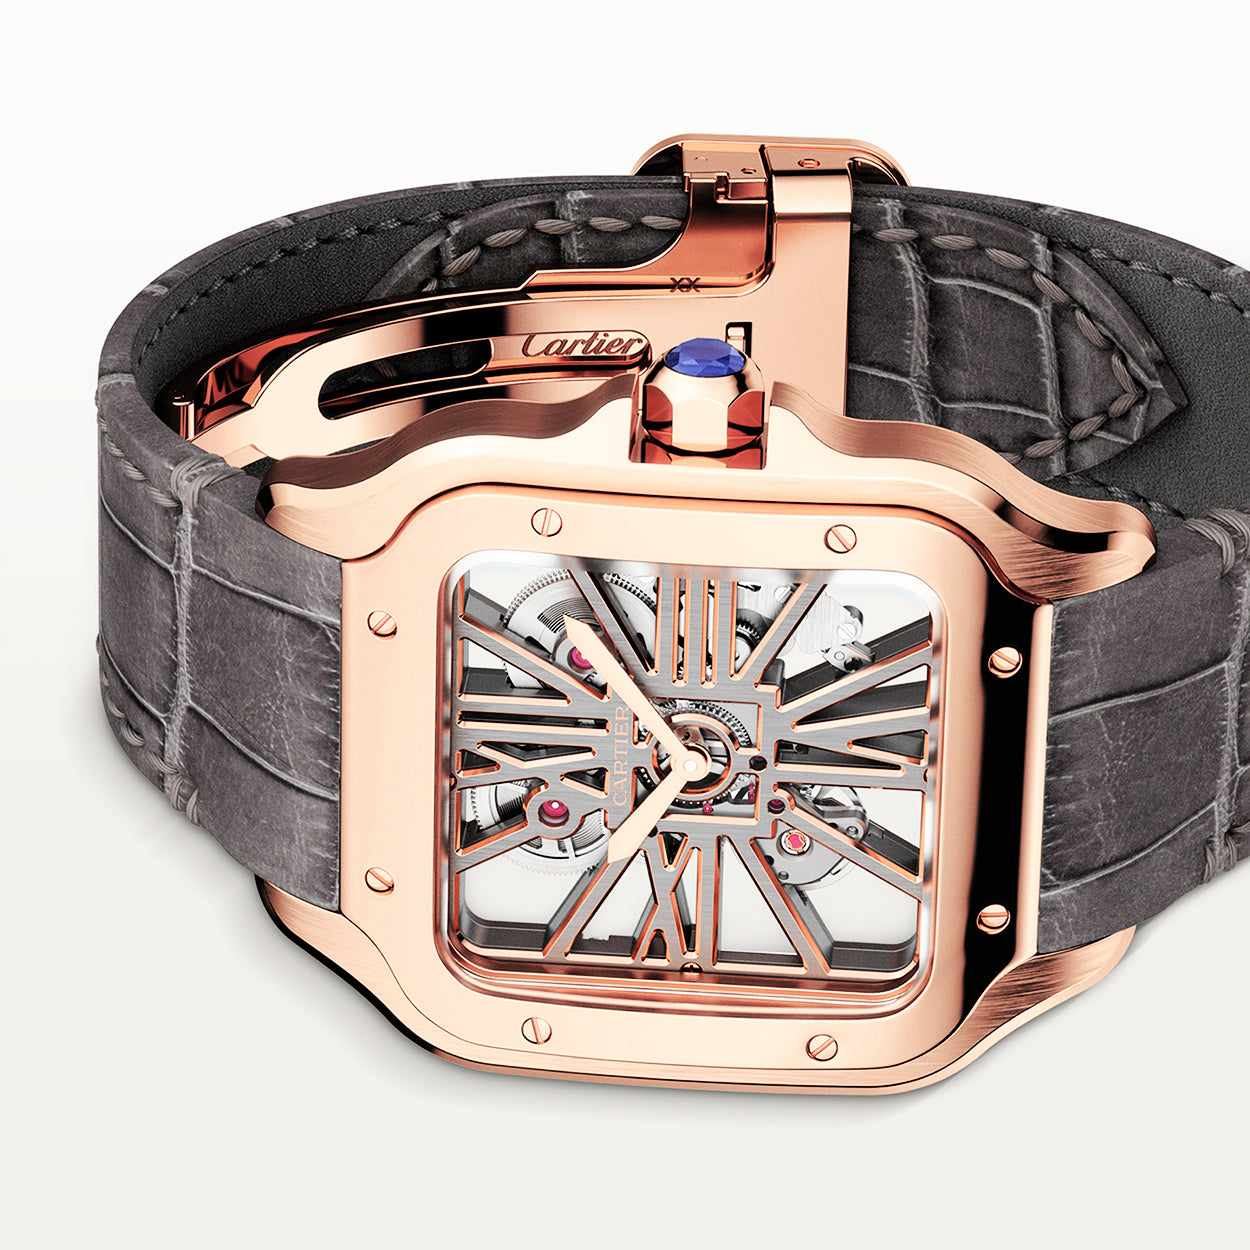 Santos de Cartier Large 18ct Rose Gold Skeleton Dial Strap Watch